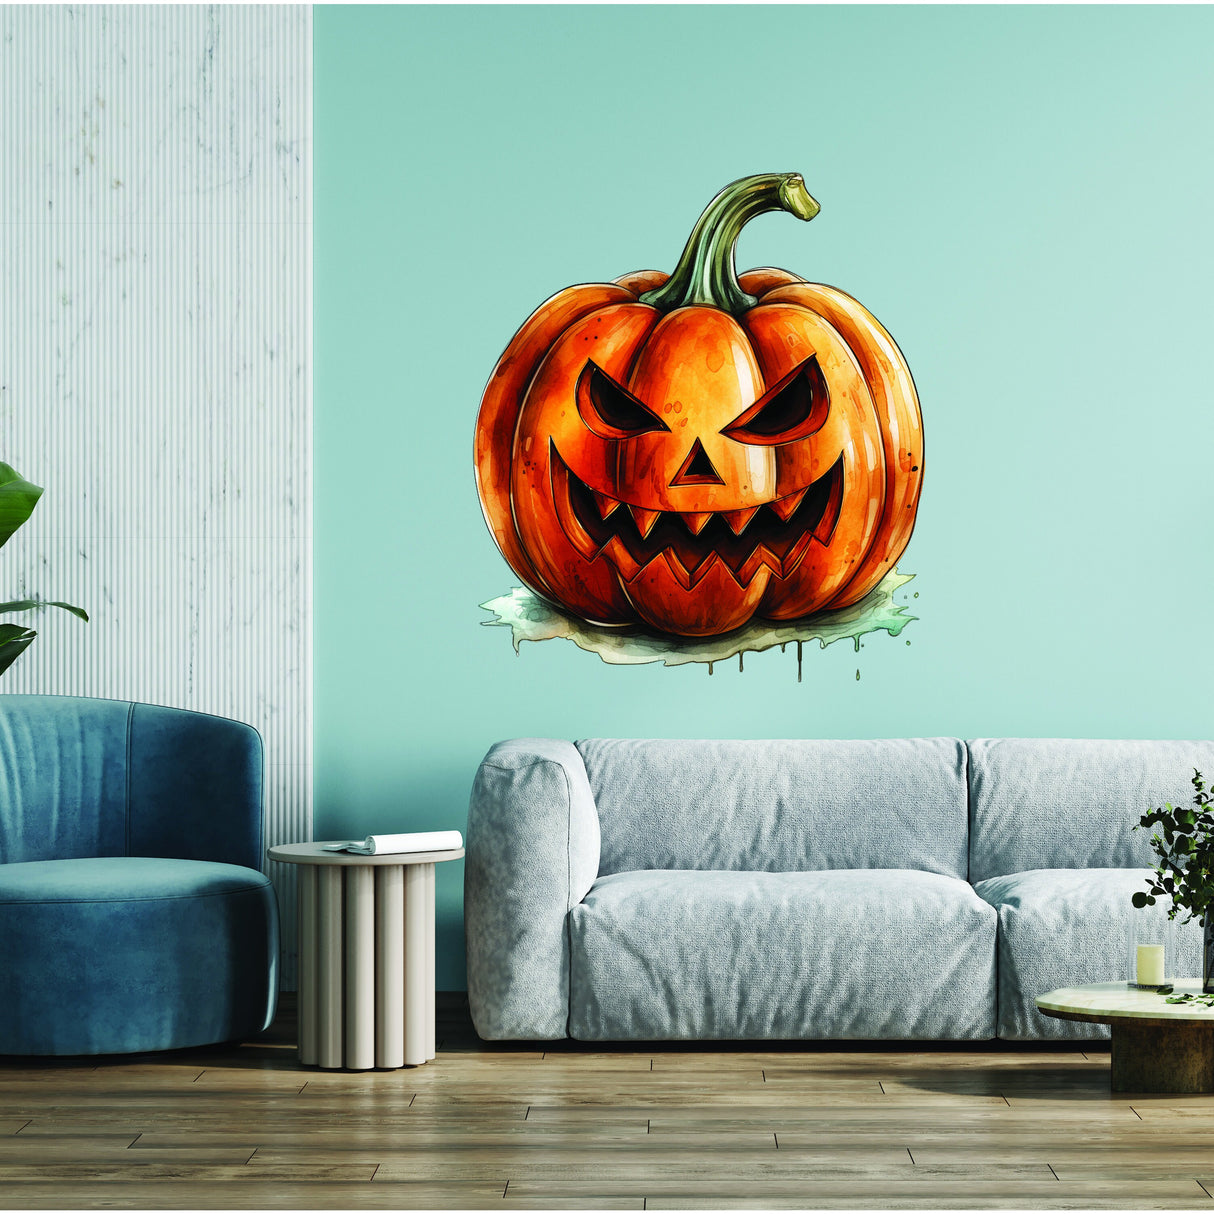 Halloween Pumpkin Wall Sticker - Creepy Smiling Jack-o-Lantern Decal for Holiday